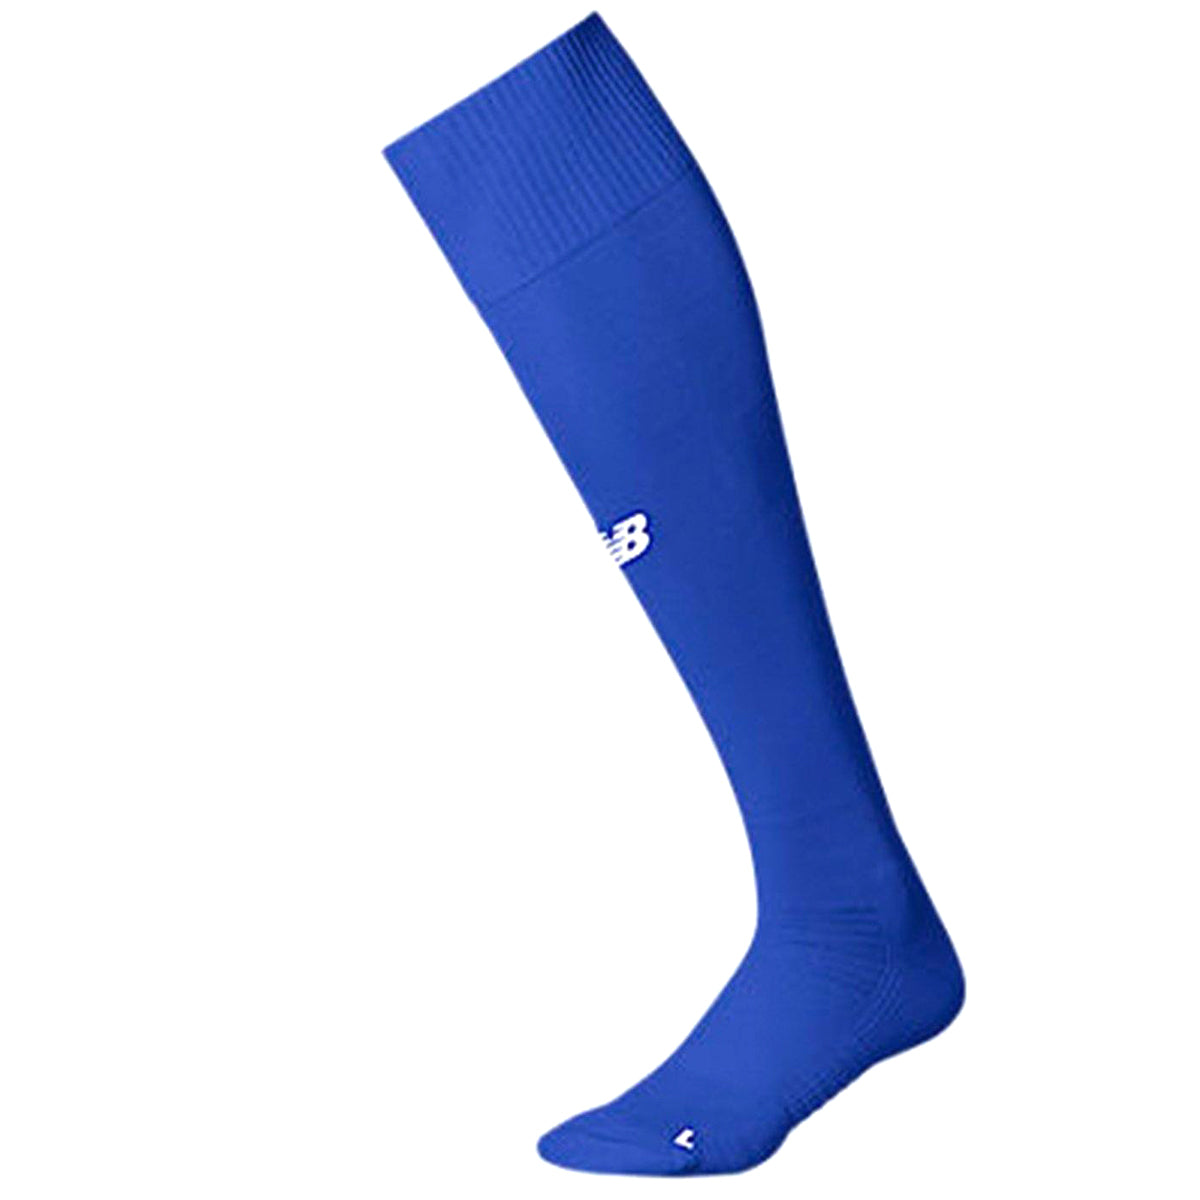 NWISC 2021 Match Sock - Bold Blue Socks Goal Kick Soccer Small (Youth 13-4) Bold Blue 